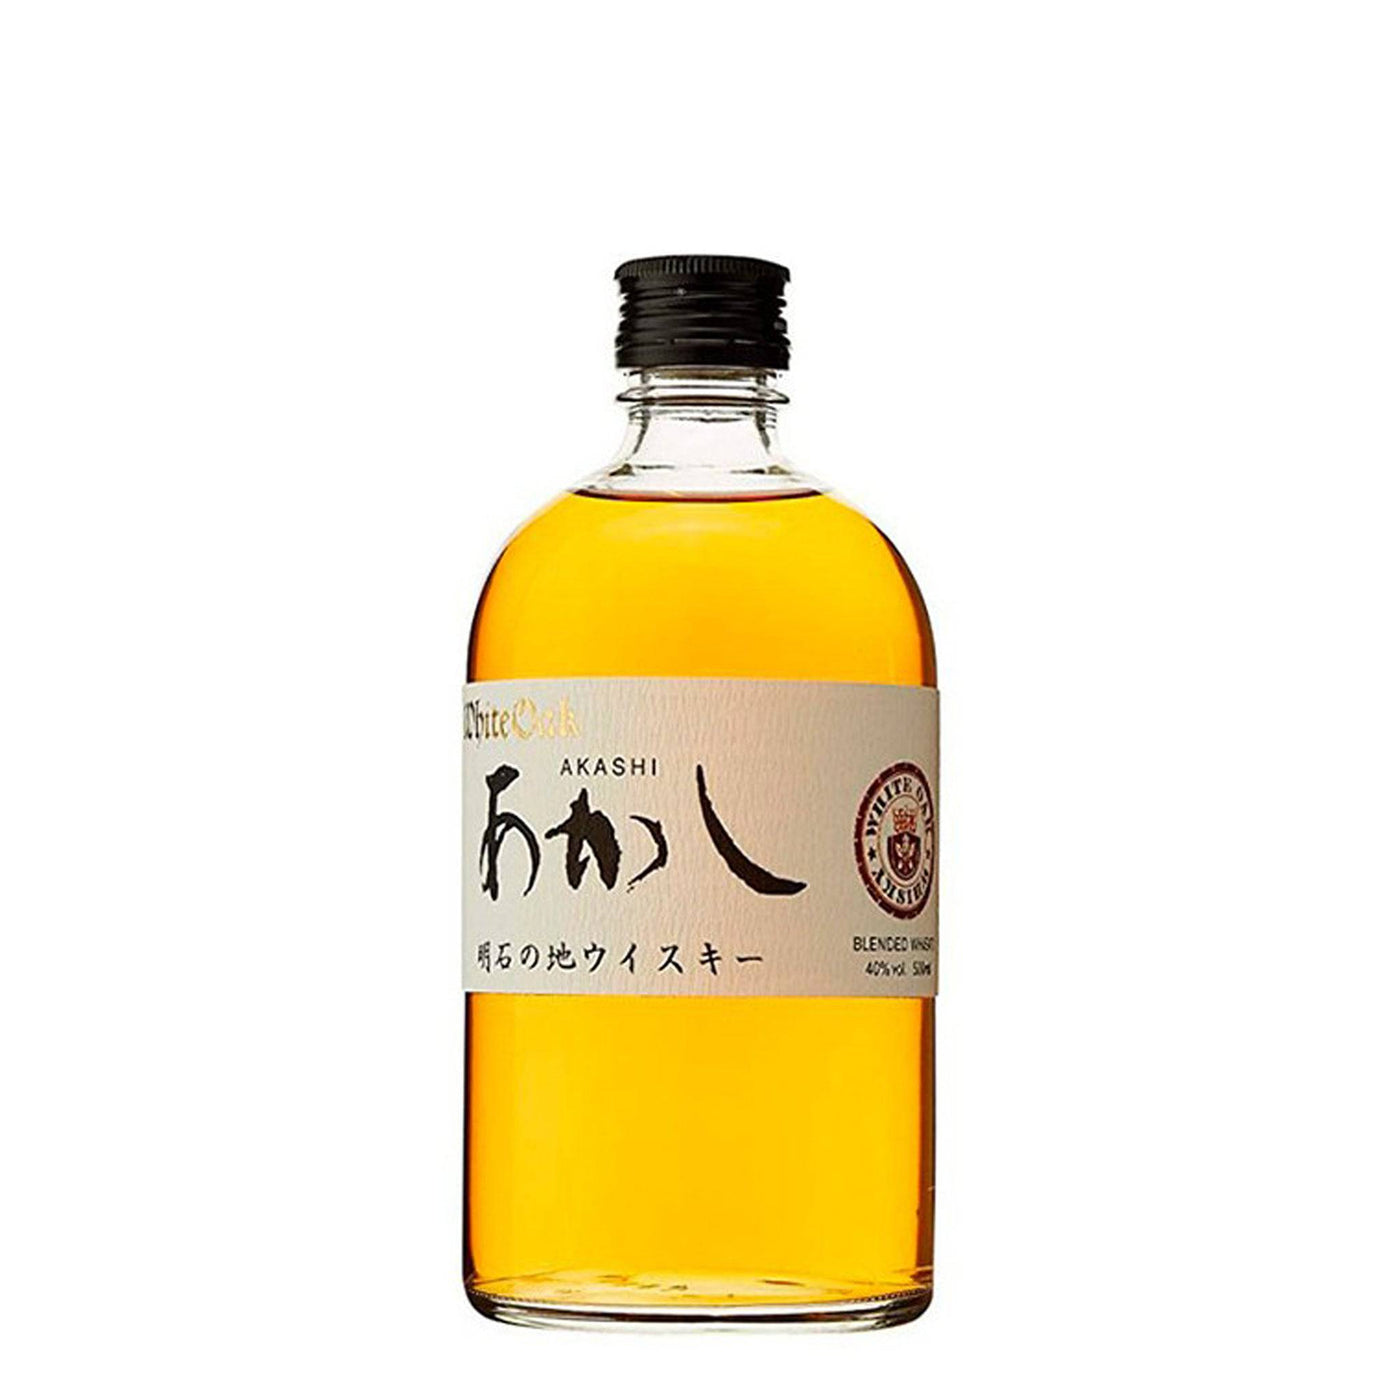 Akashi White Oak Blended Whisky - Spiritly